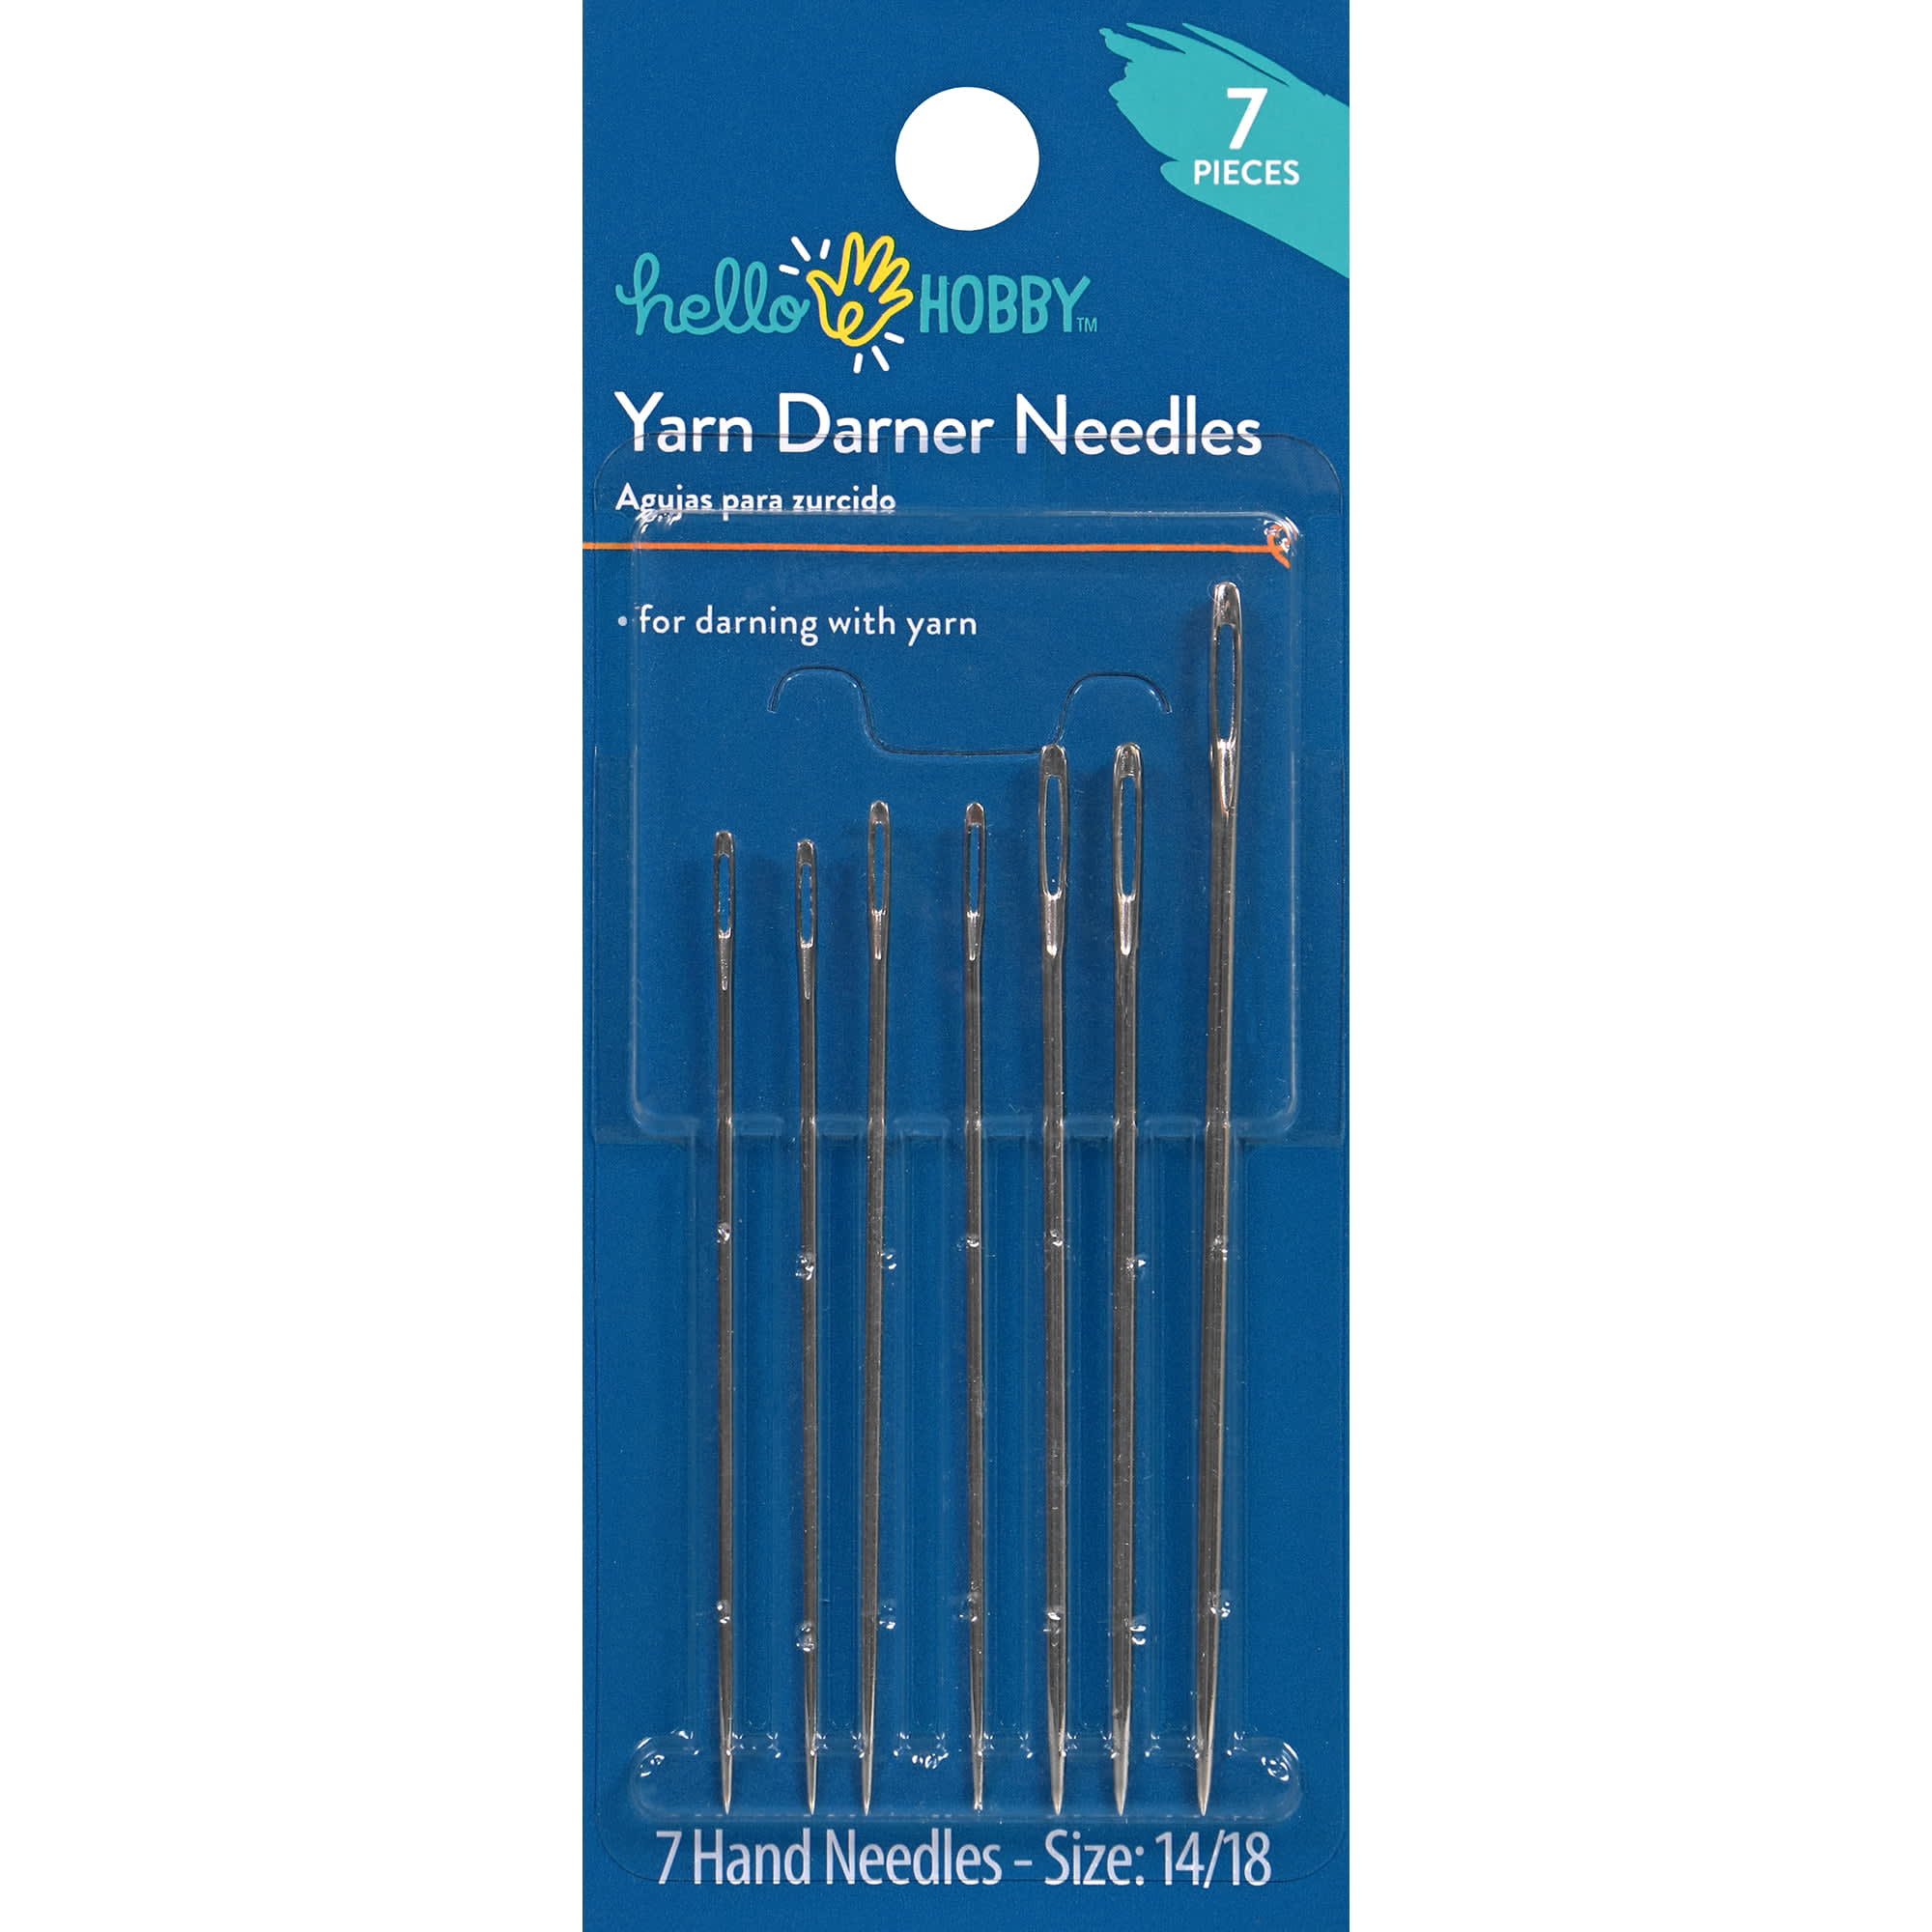 Hello Hobby Long Yarn Darner Hand Sewing Needles, Sizes 14/18, 7